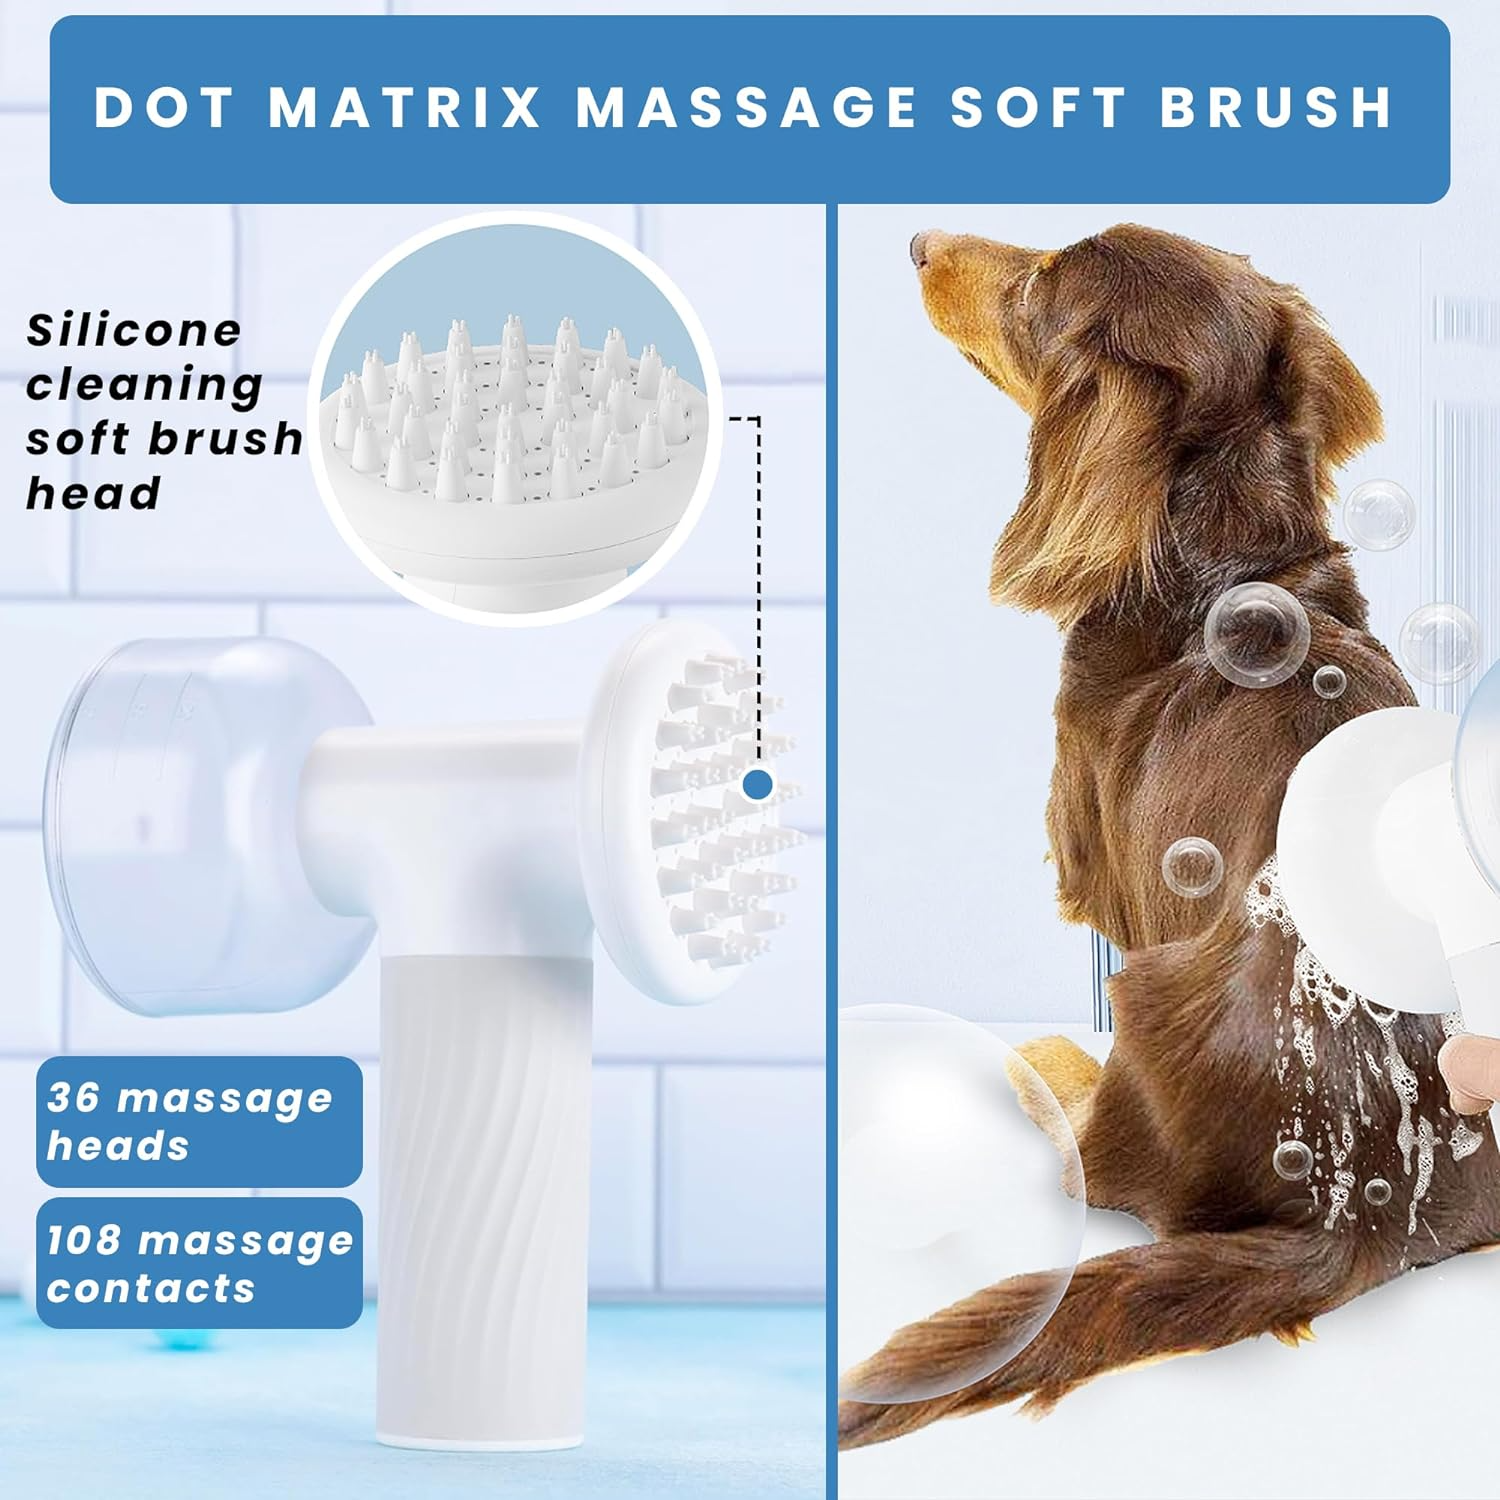 Dog Bath Brush with Soap Dispenser - Cordless Pet Bath Brush Scrubber